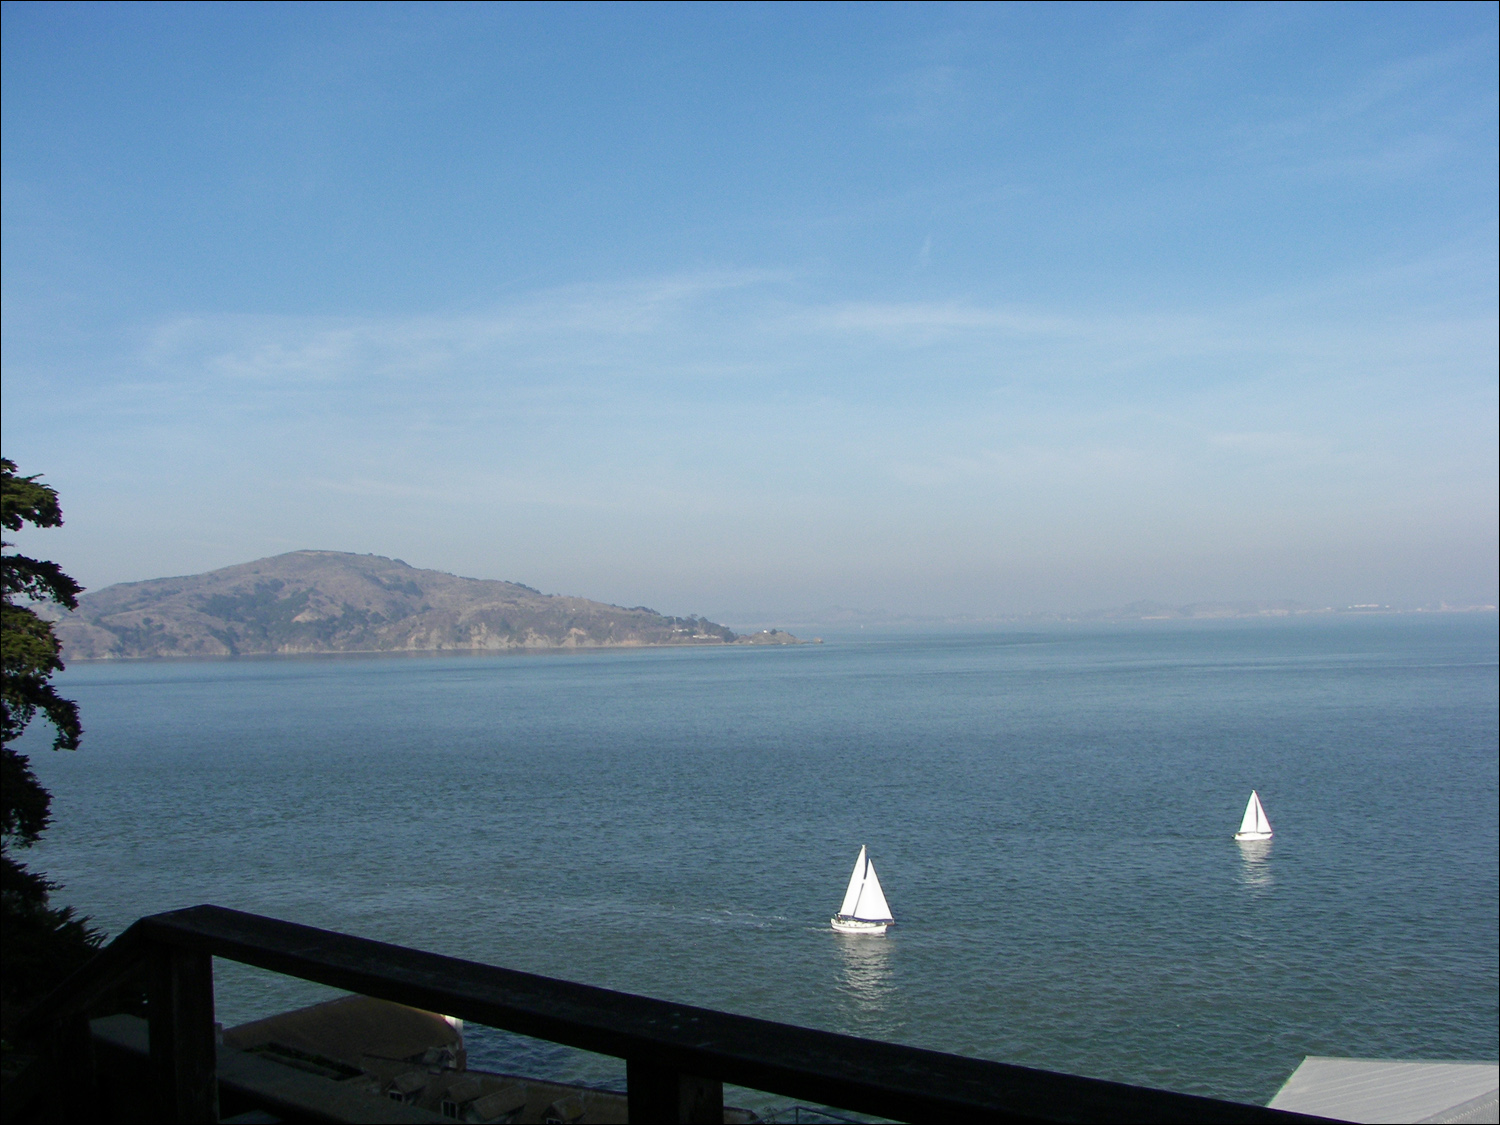 Bay view from Alcatraz